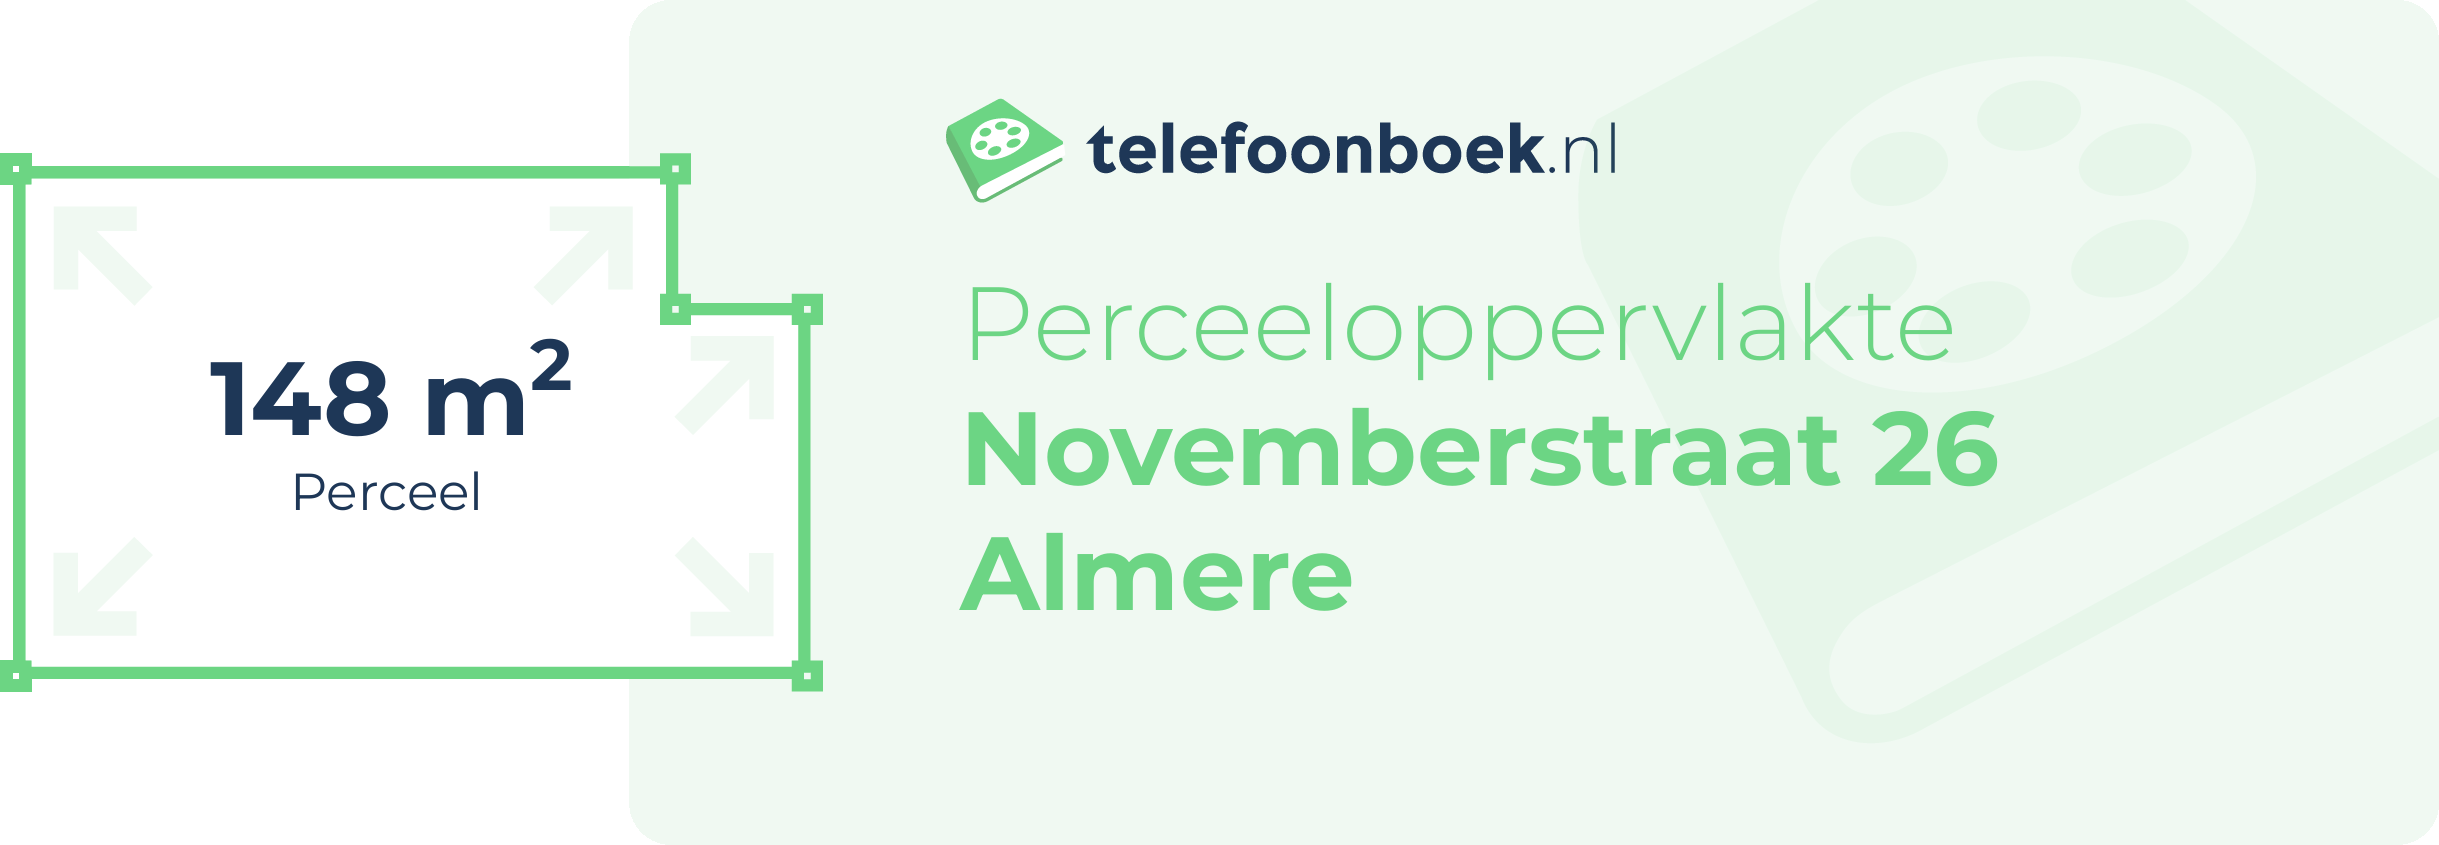 Perceeloppervlakte Novemberstraat 26 Almere